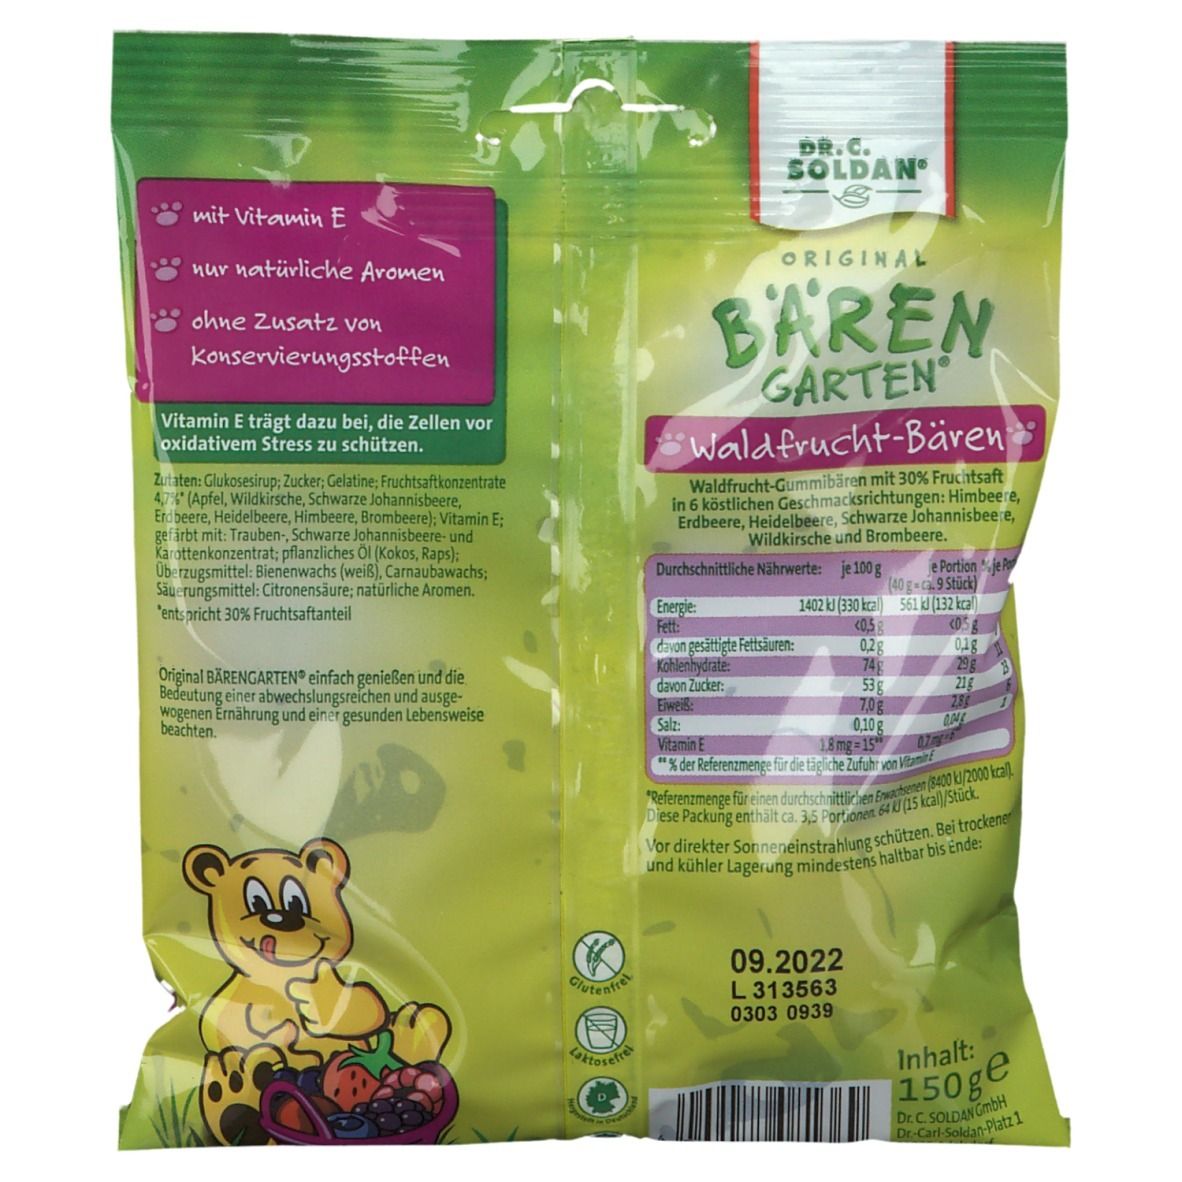 Original Bärengarten® Waldfrucht-Bären mit Antioxidantien